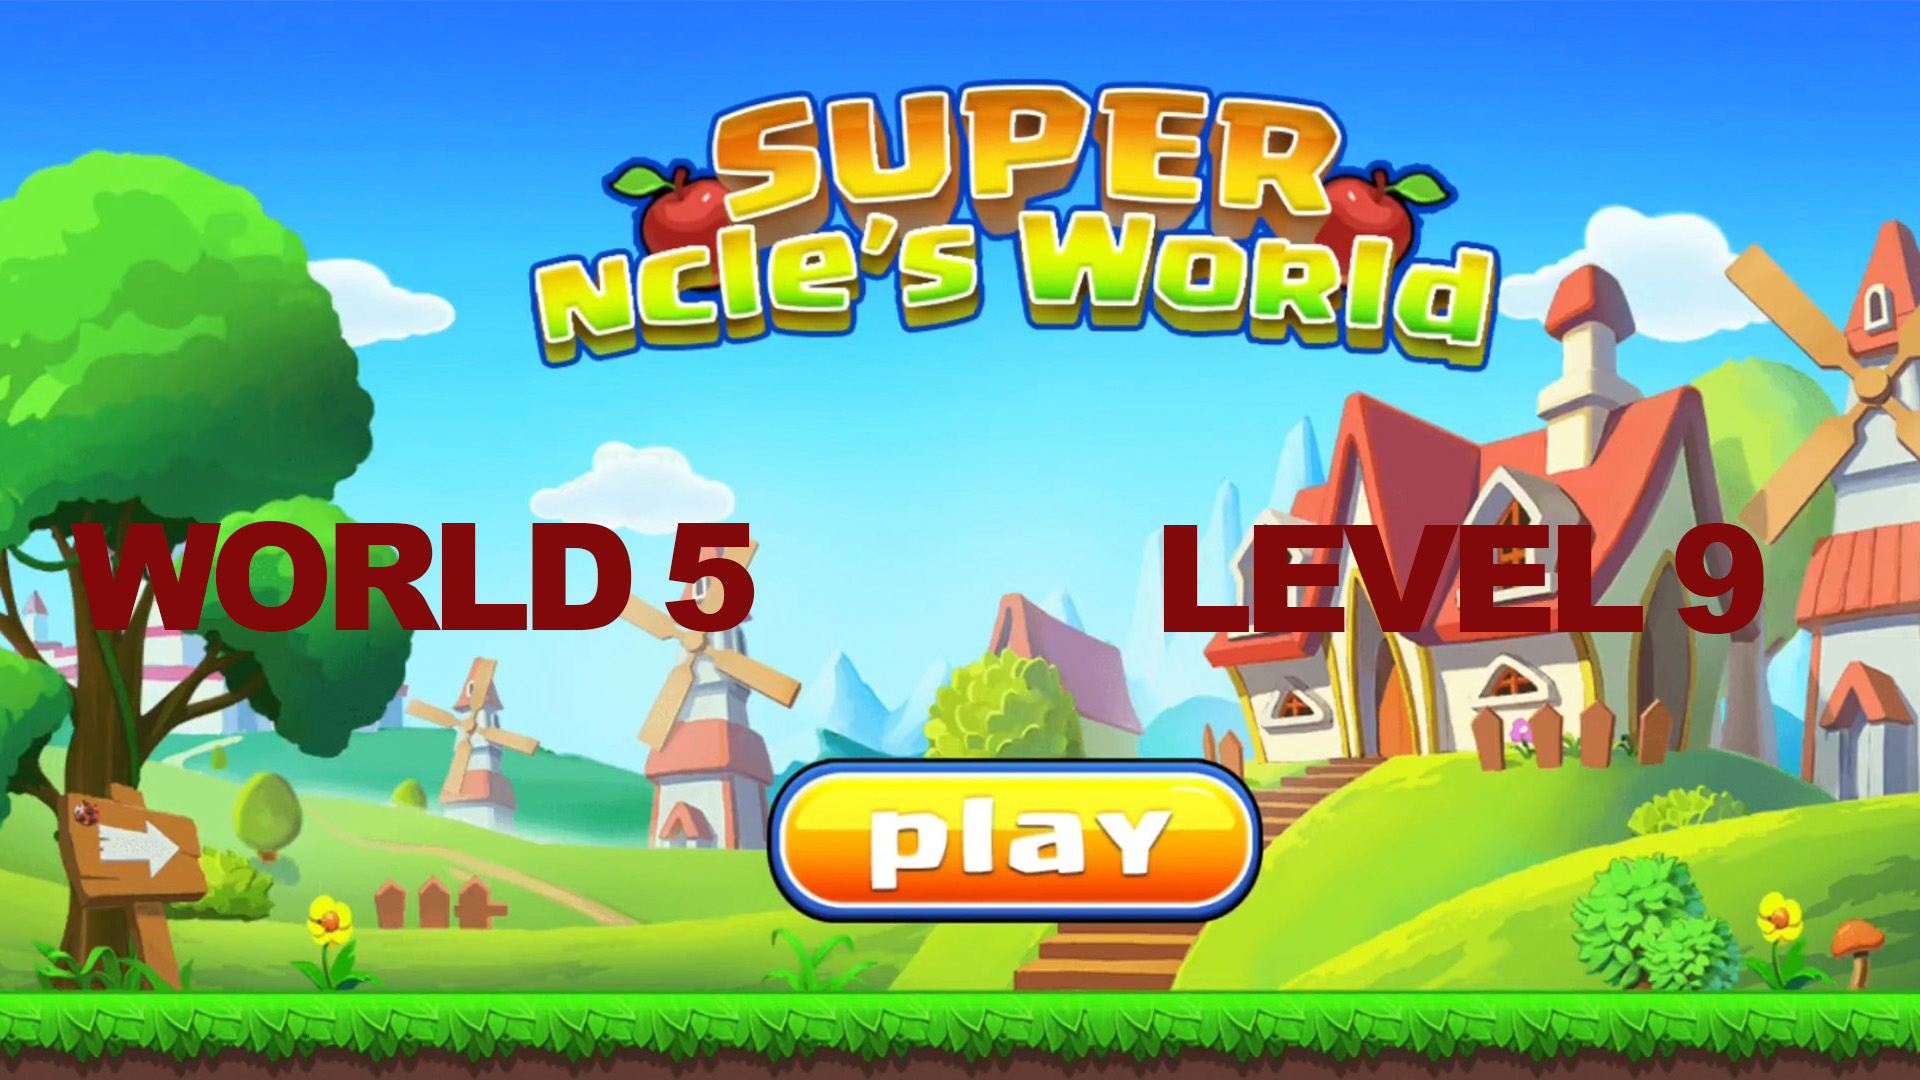 Super ncle's  World 5. Level 9.